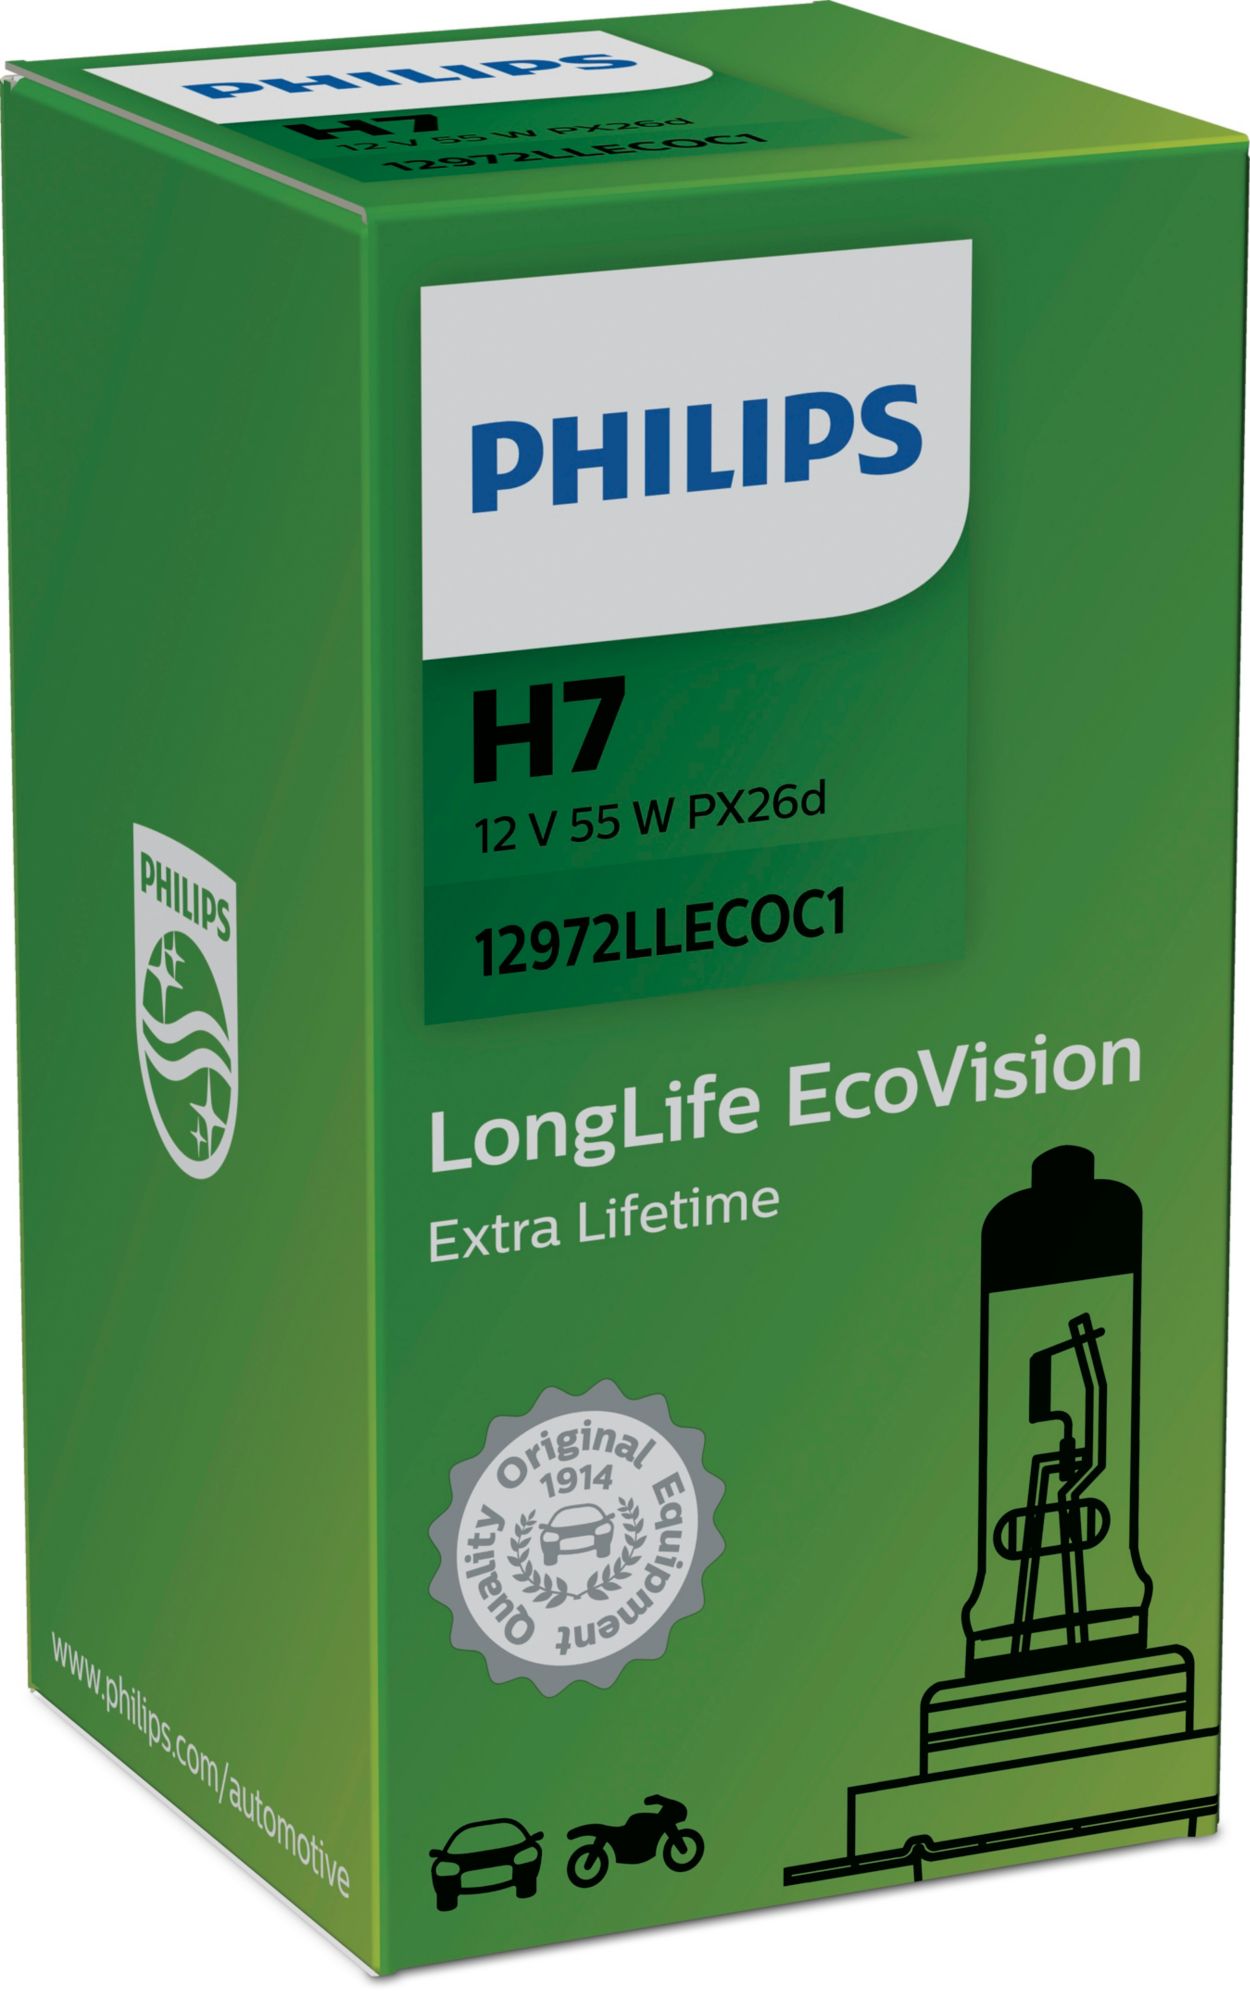 LongLife EcoVision car headlight bulb 12972LLECOC1